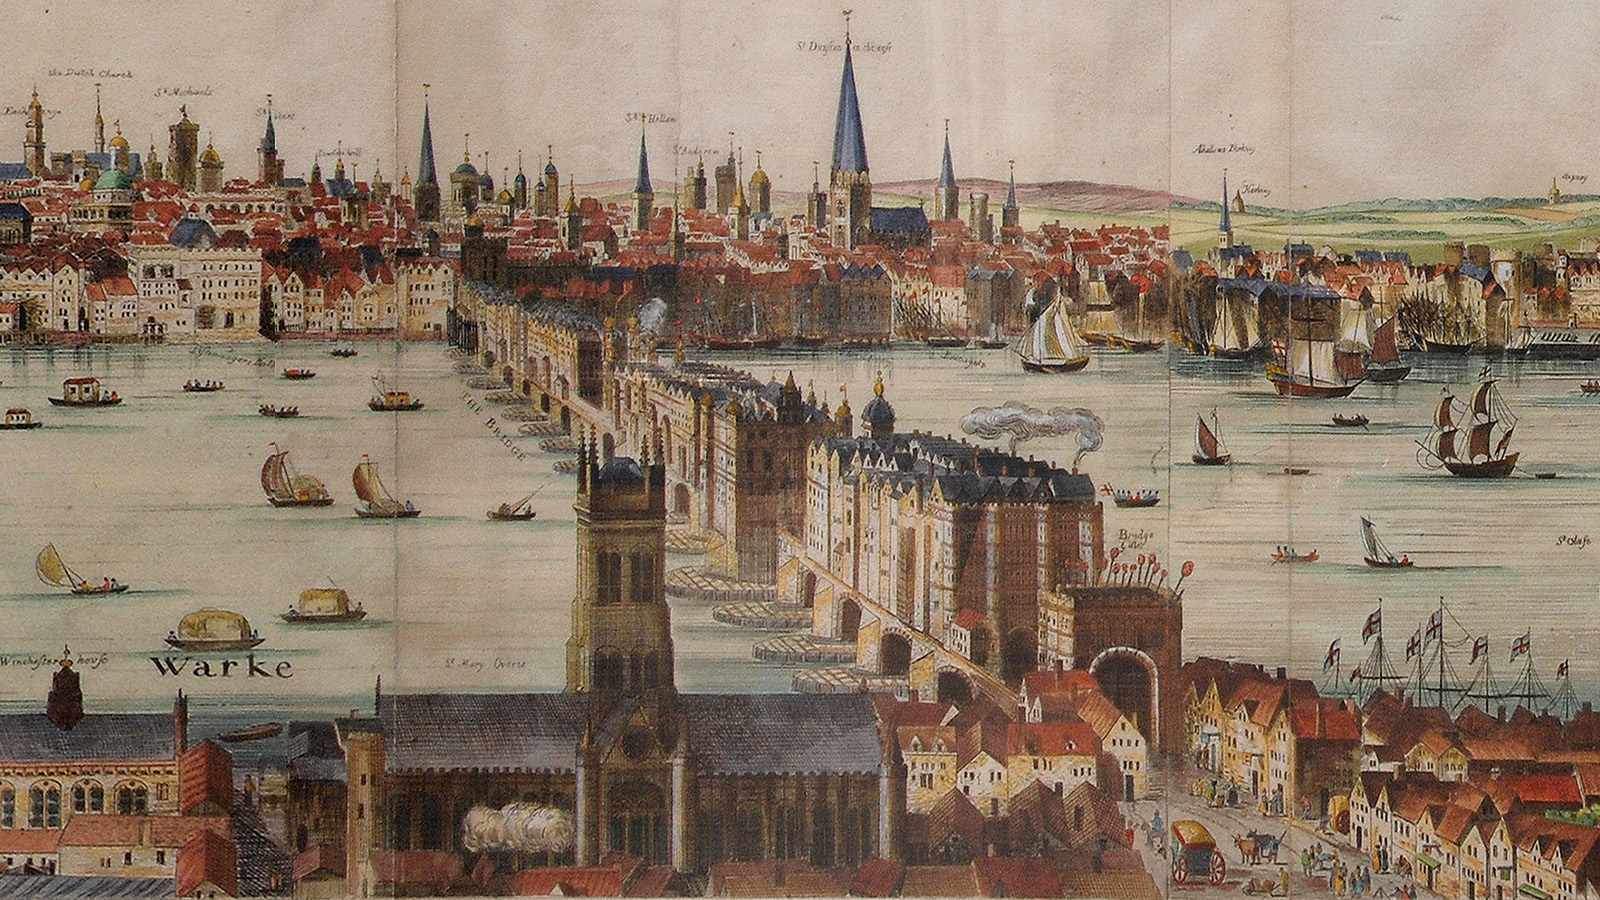 17 century. Лондон 17 века река Темза. Англия 16 век Лондон. Англия в 16 веке Лондон. Лондонский мост 16 век.